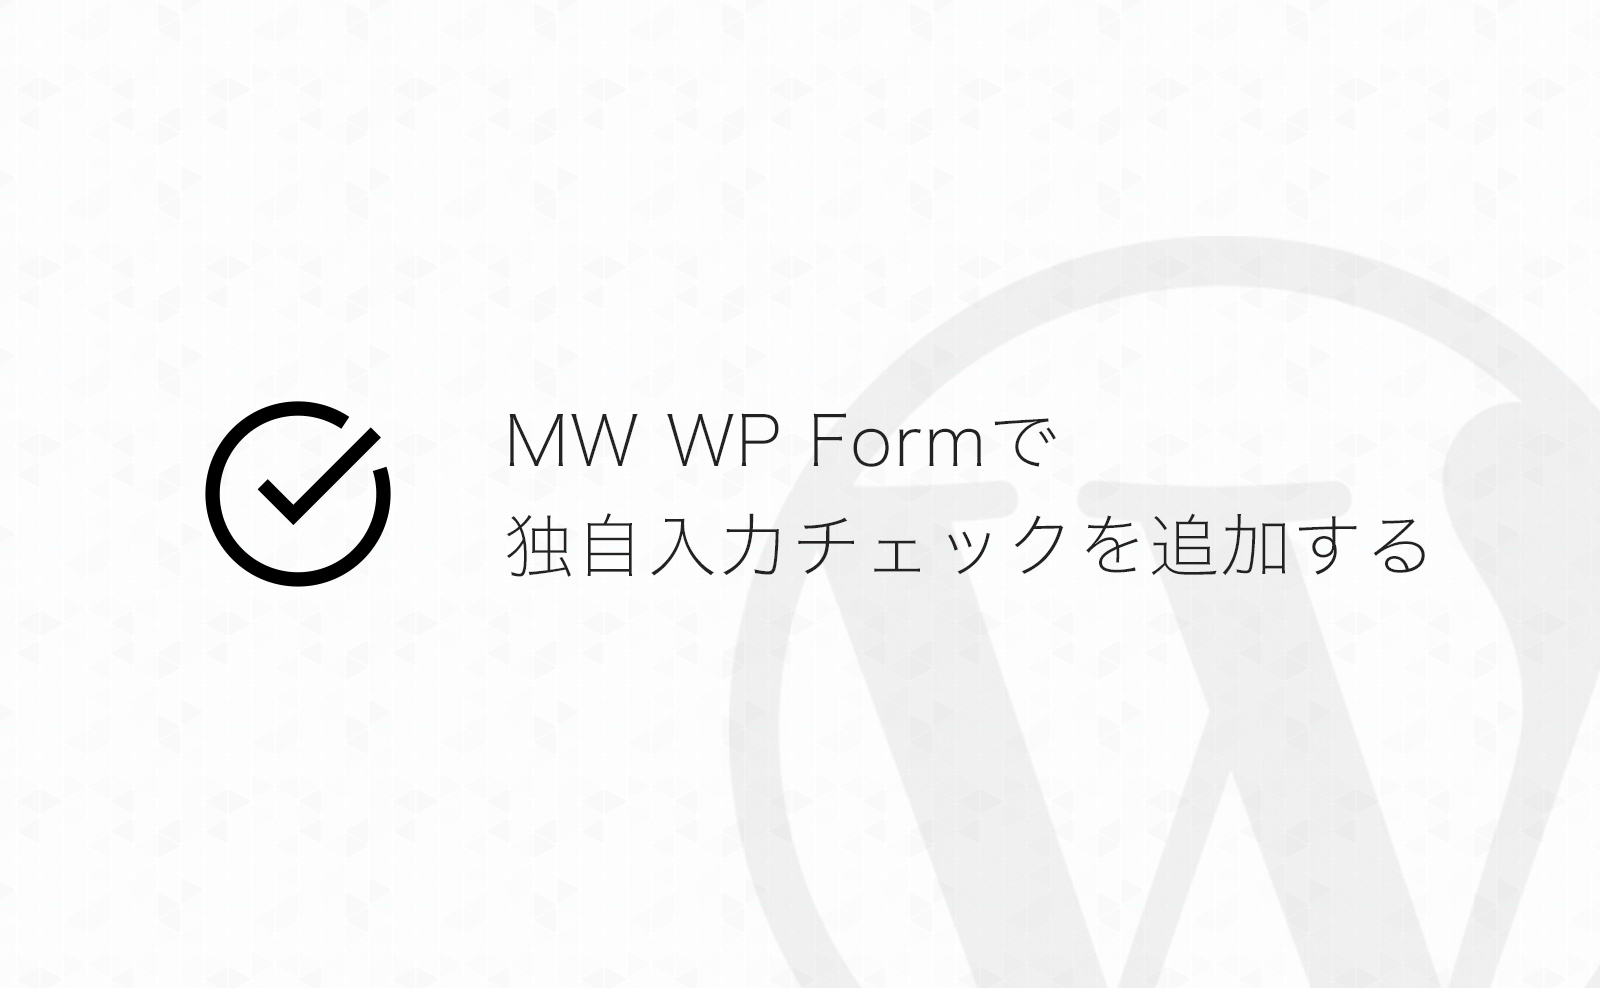 【WordPress】MW WP Formで独自の入力チェックを追加する方法